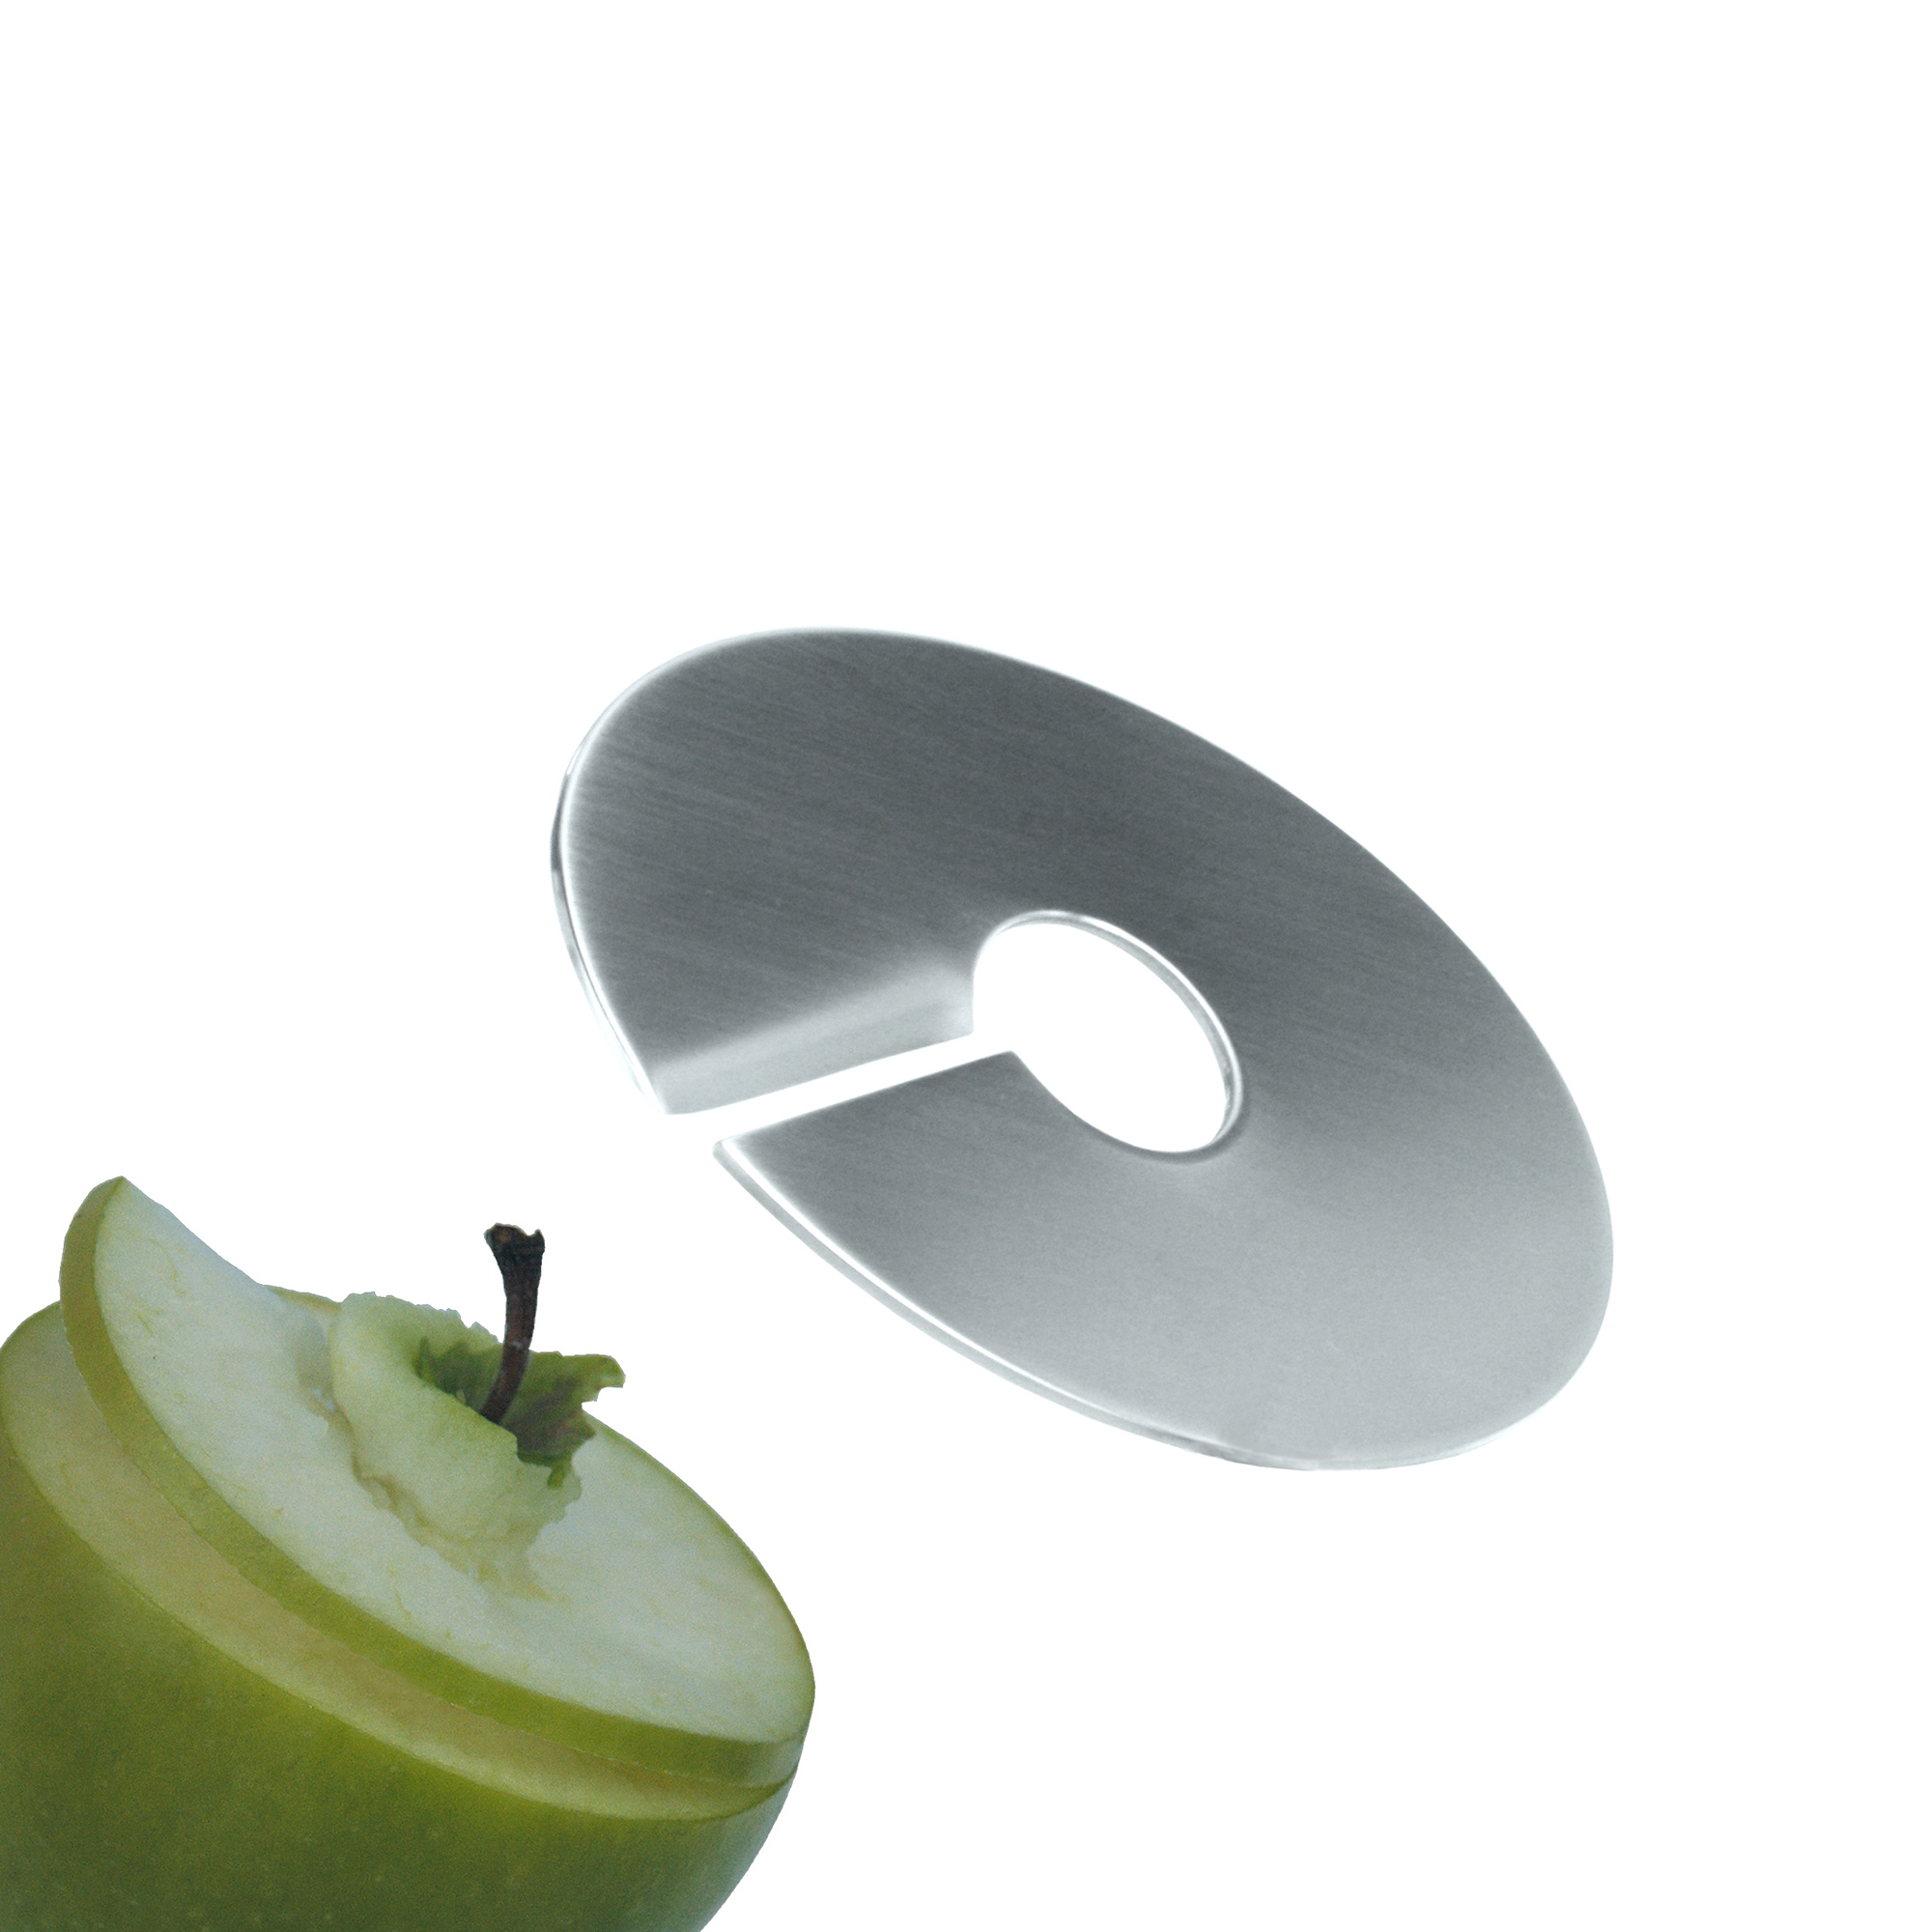 Zyliss Apple Divider